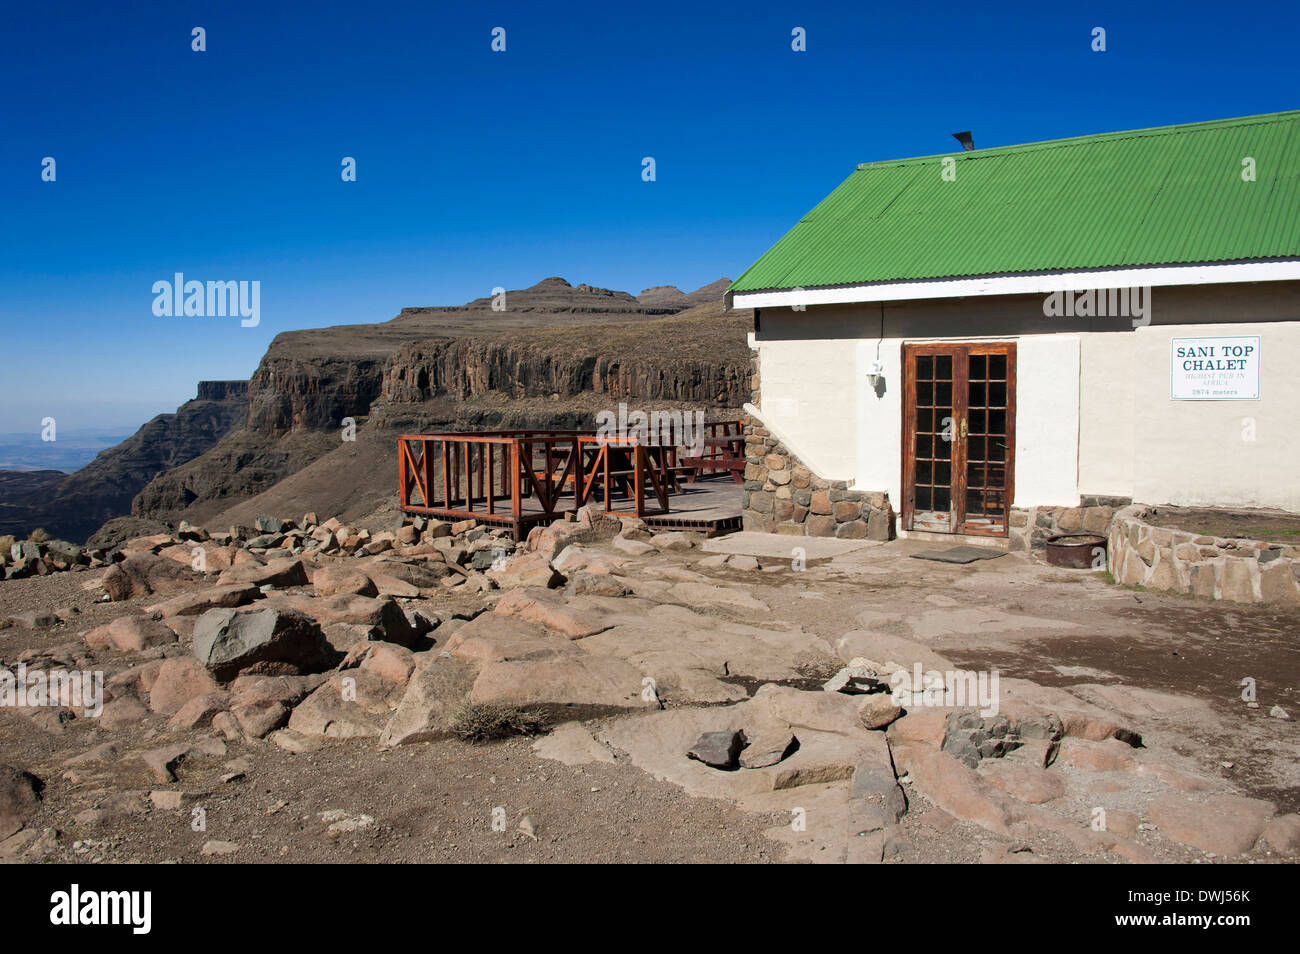 Sani Top Chalet, Lesotho Stock Photo